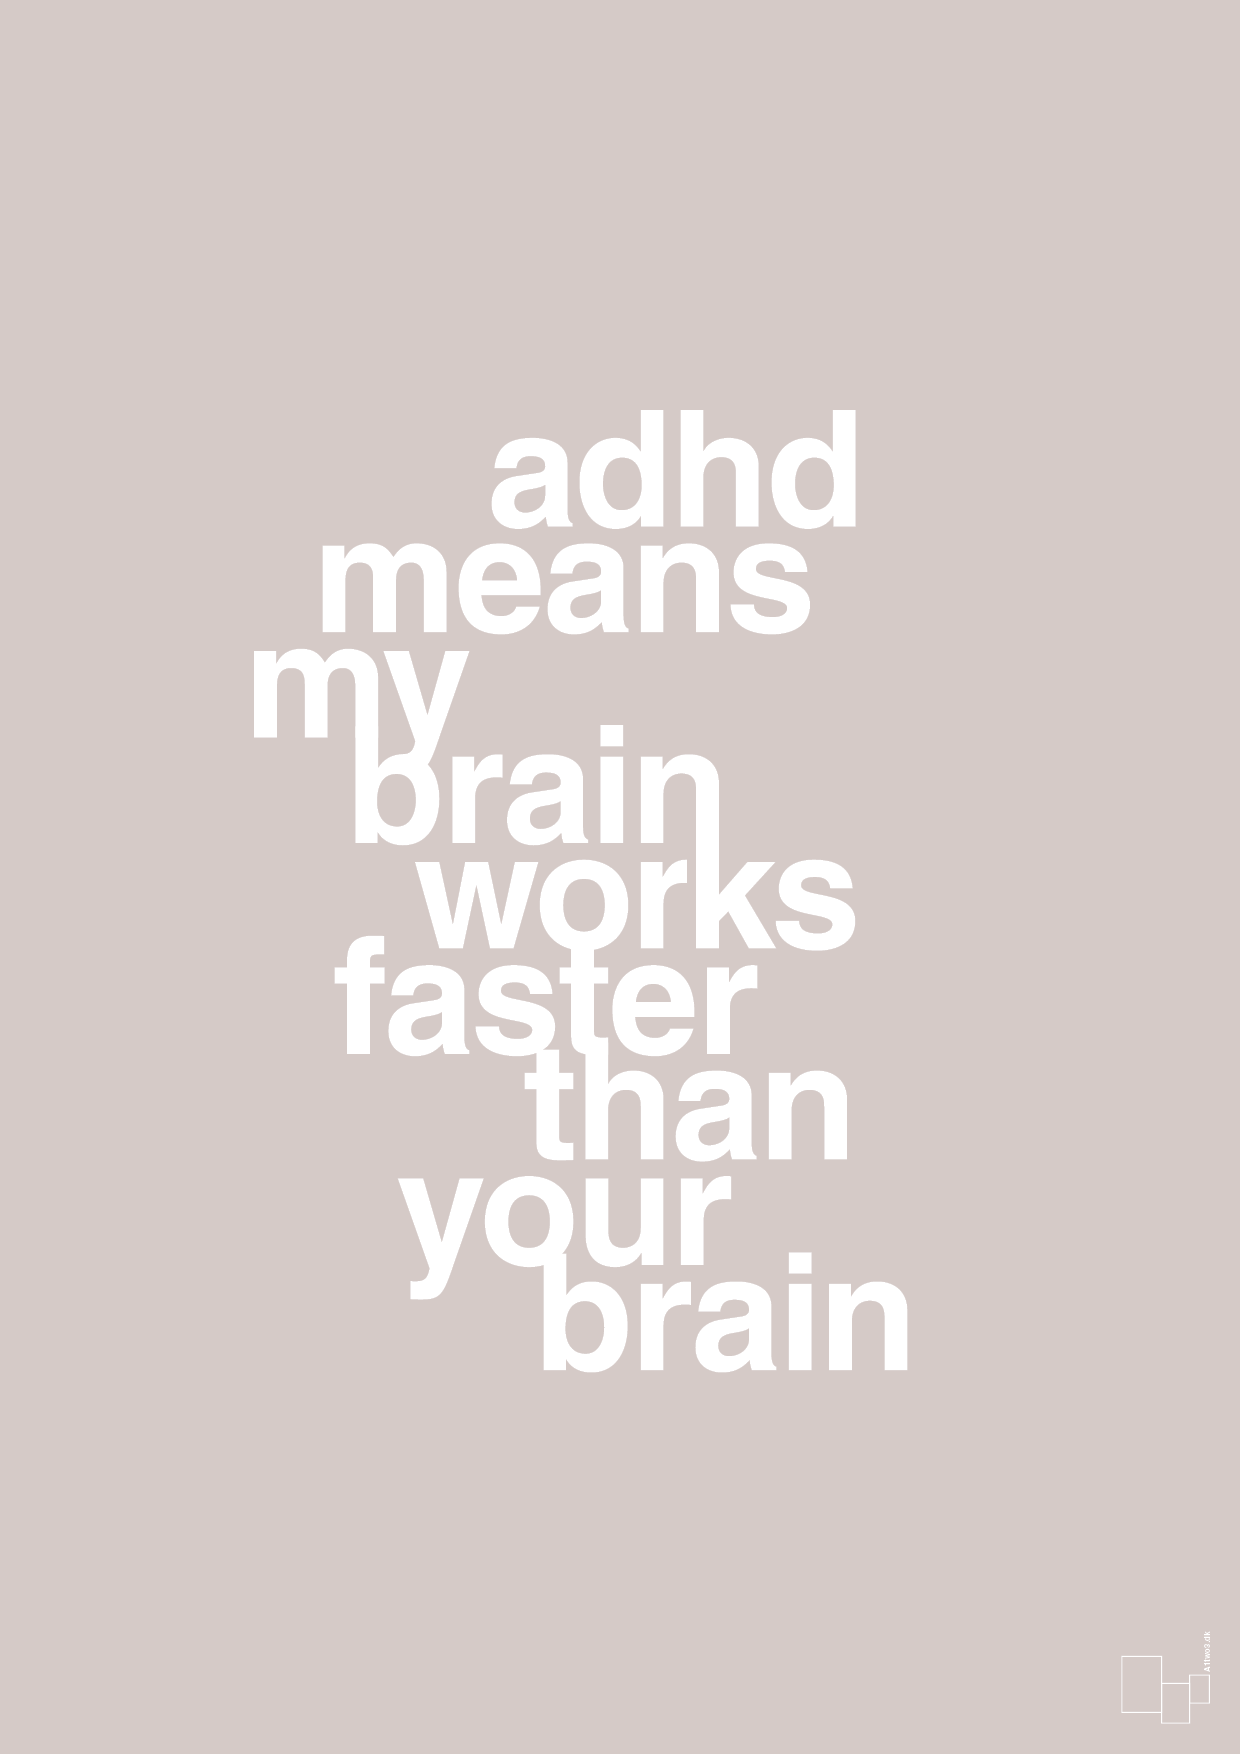 adhd means my brain works faster than your brain - Plakat med Samfund i Broken Beige